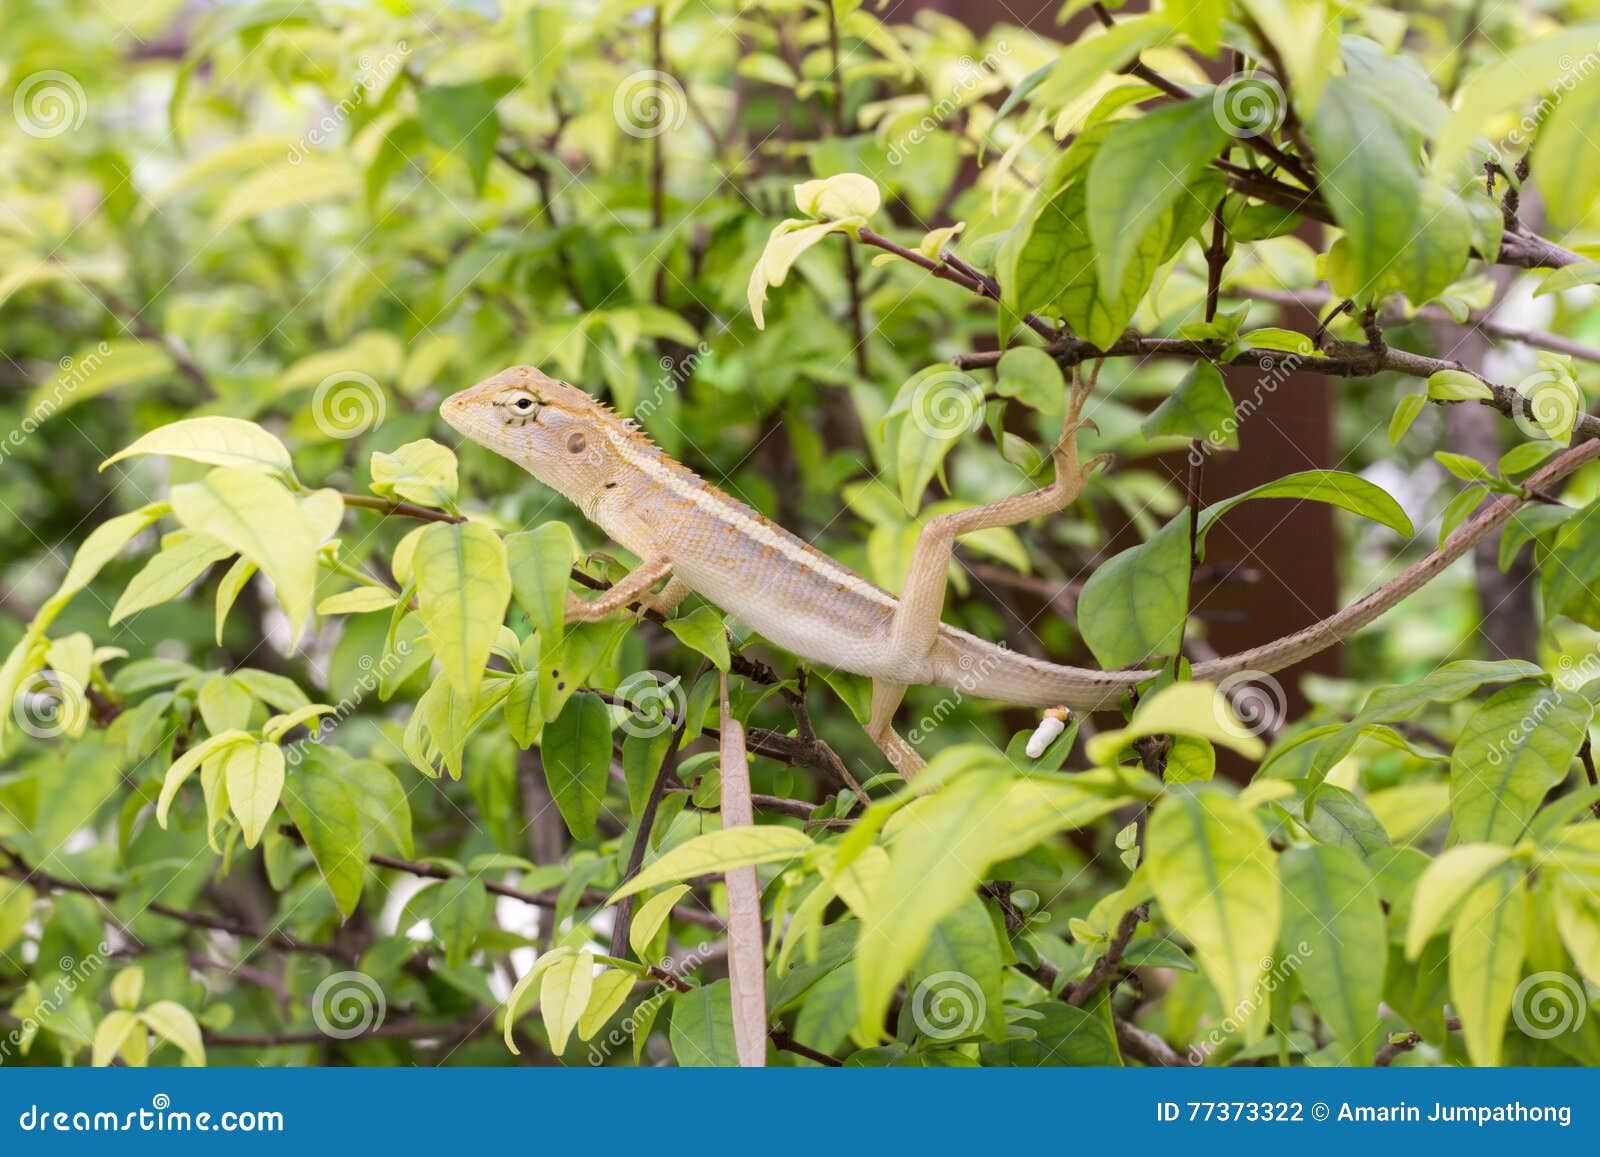 Chameleon dragon stock photo. Image of branch, iguana - 77373322